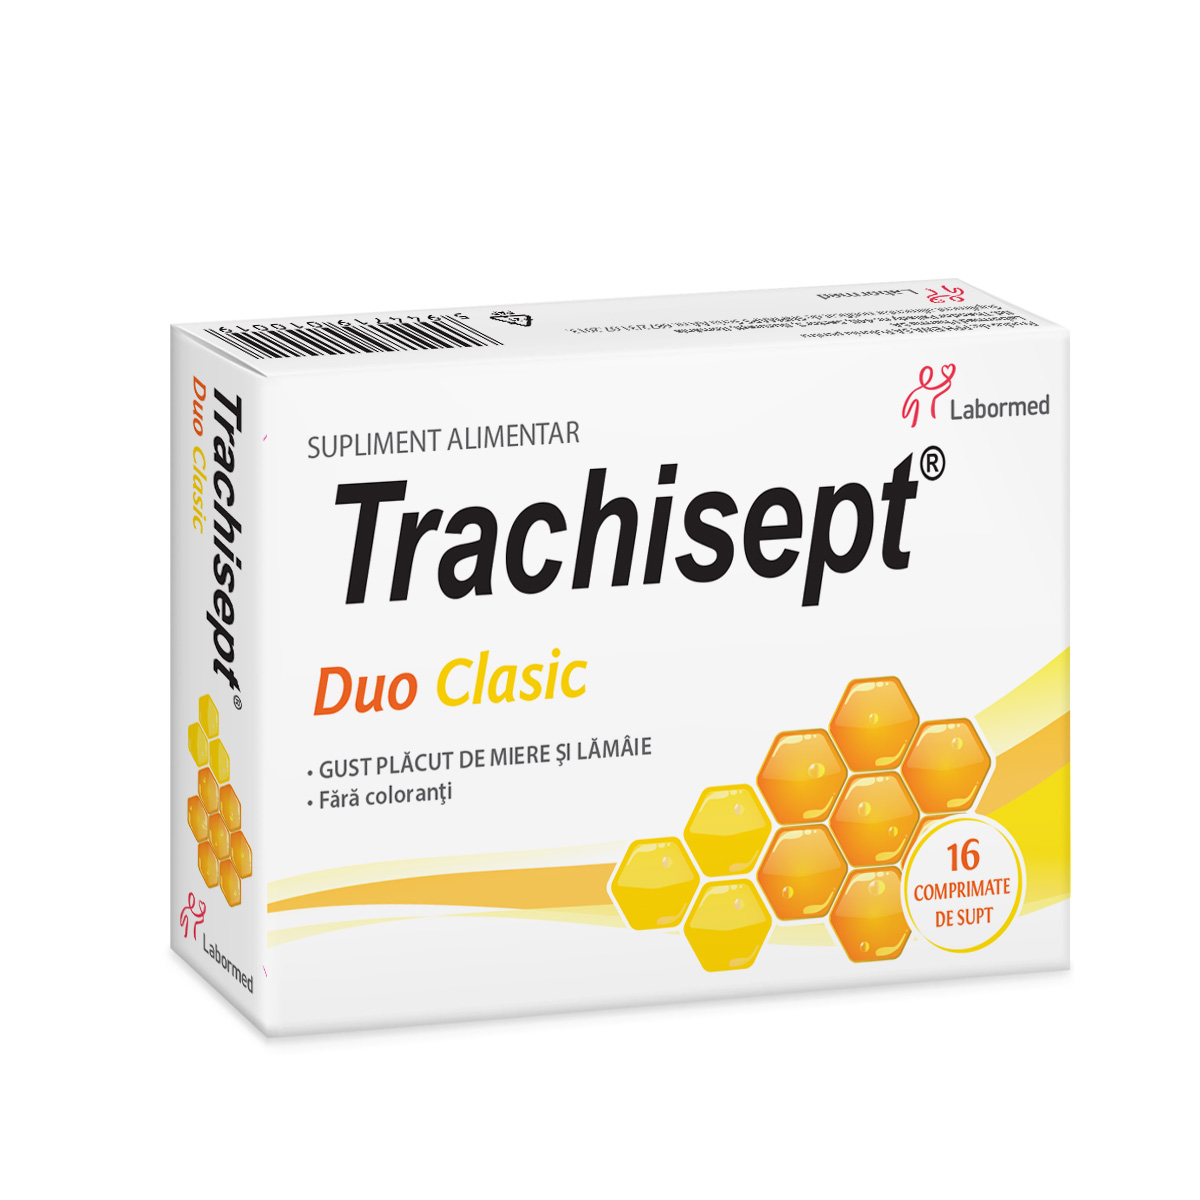 Trachisept Duo Clasic, 16 comprimate pentru supt, Labormed